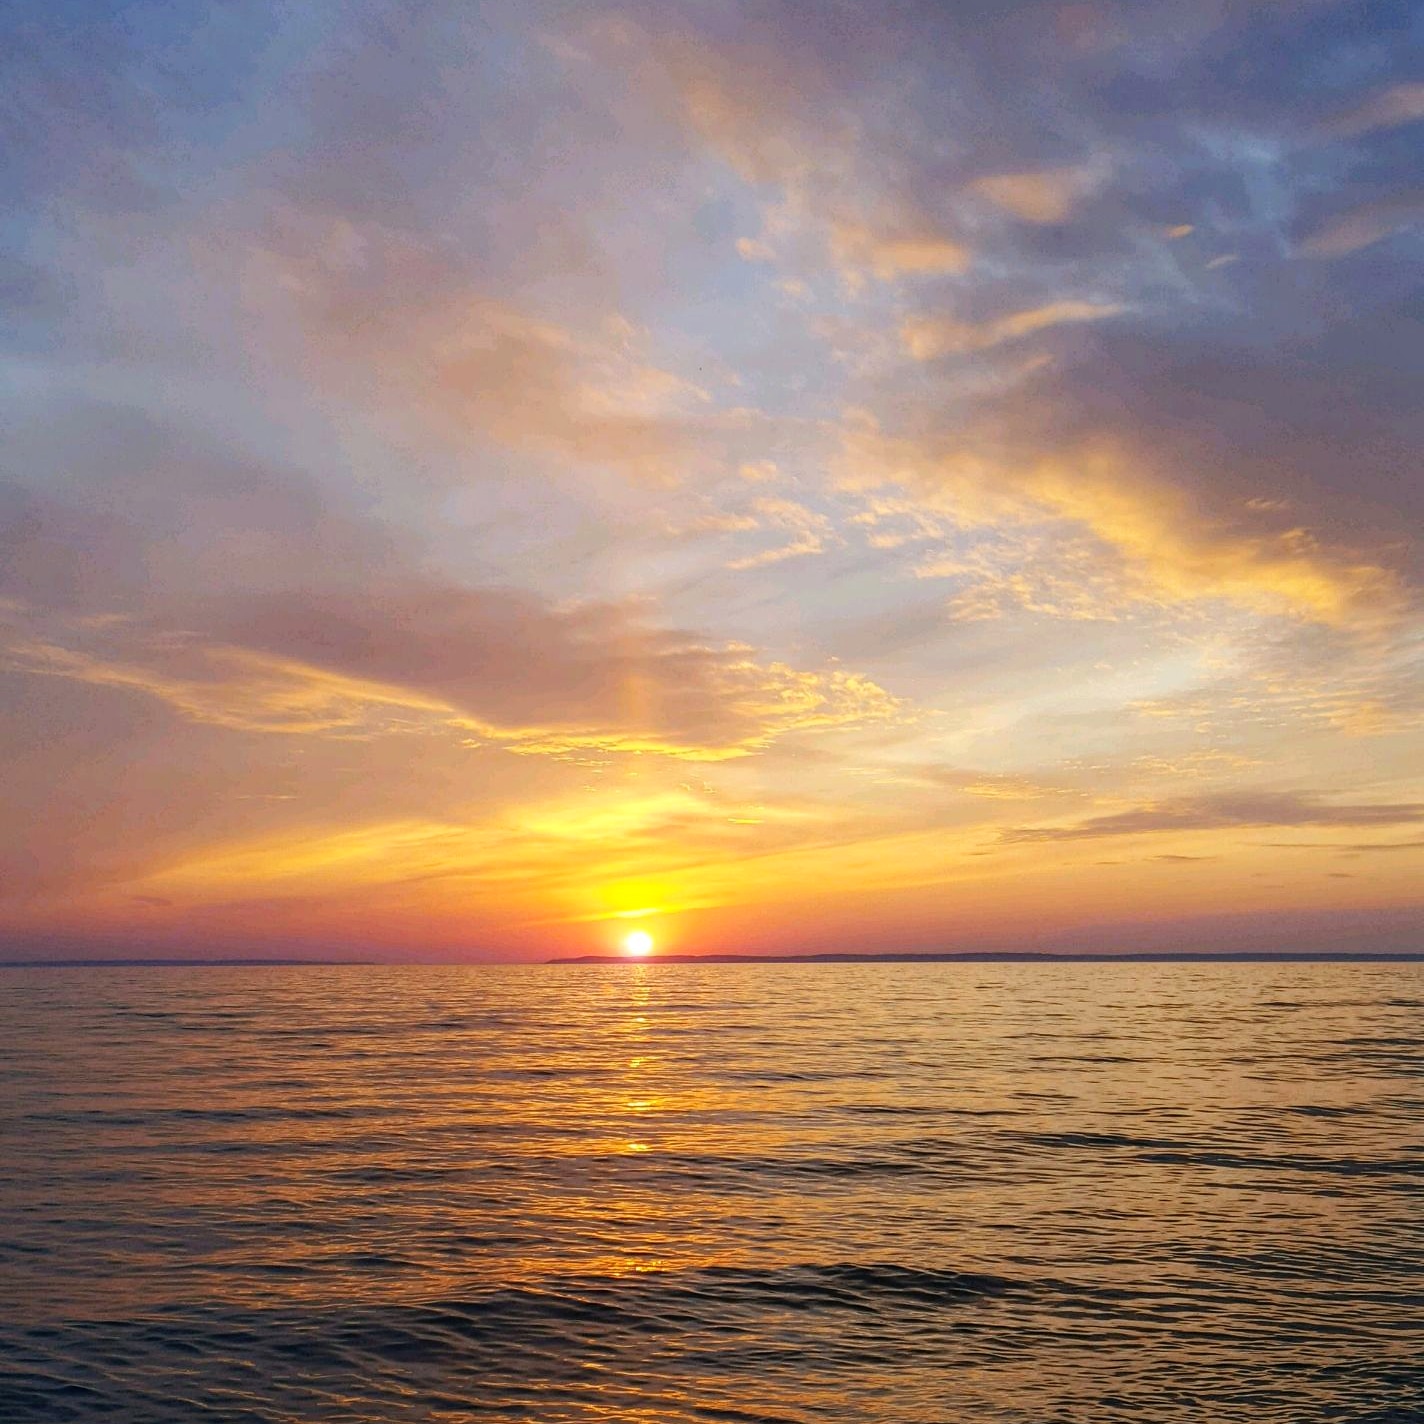 Amazing sunset taken off PlayNorth boat rental at Van's Beach in Leland Leelanau County Michigan.